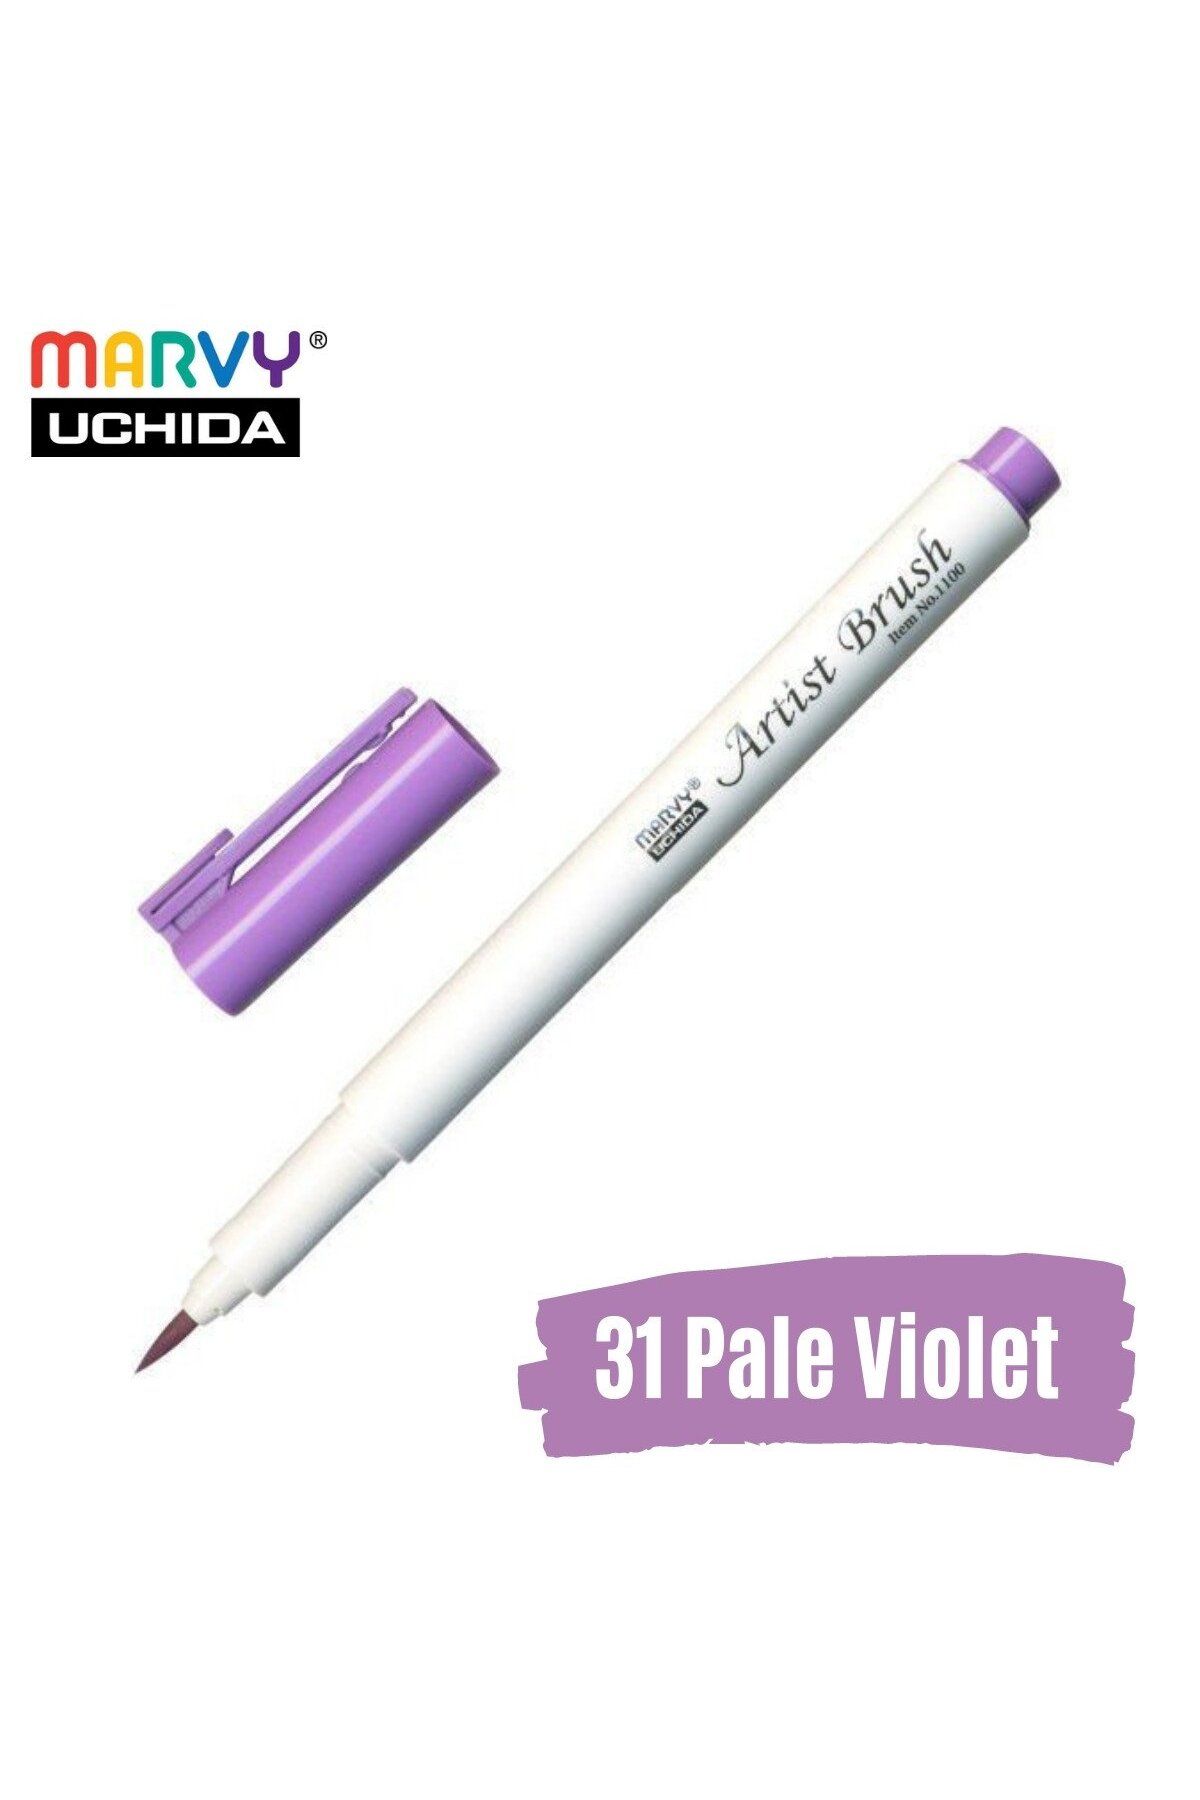 Marvy Artist Brush Pen 1100 Firça Uçlu Kalem 31 Pale Violet